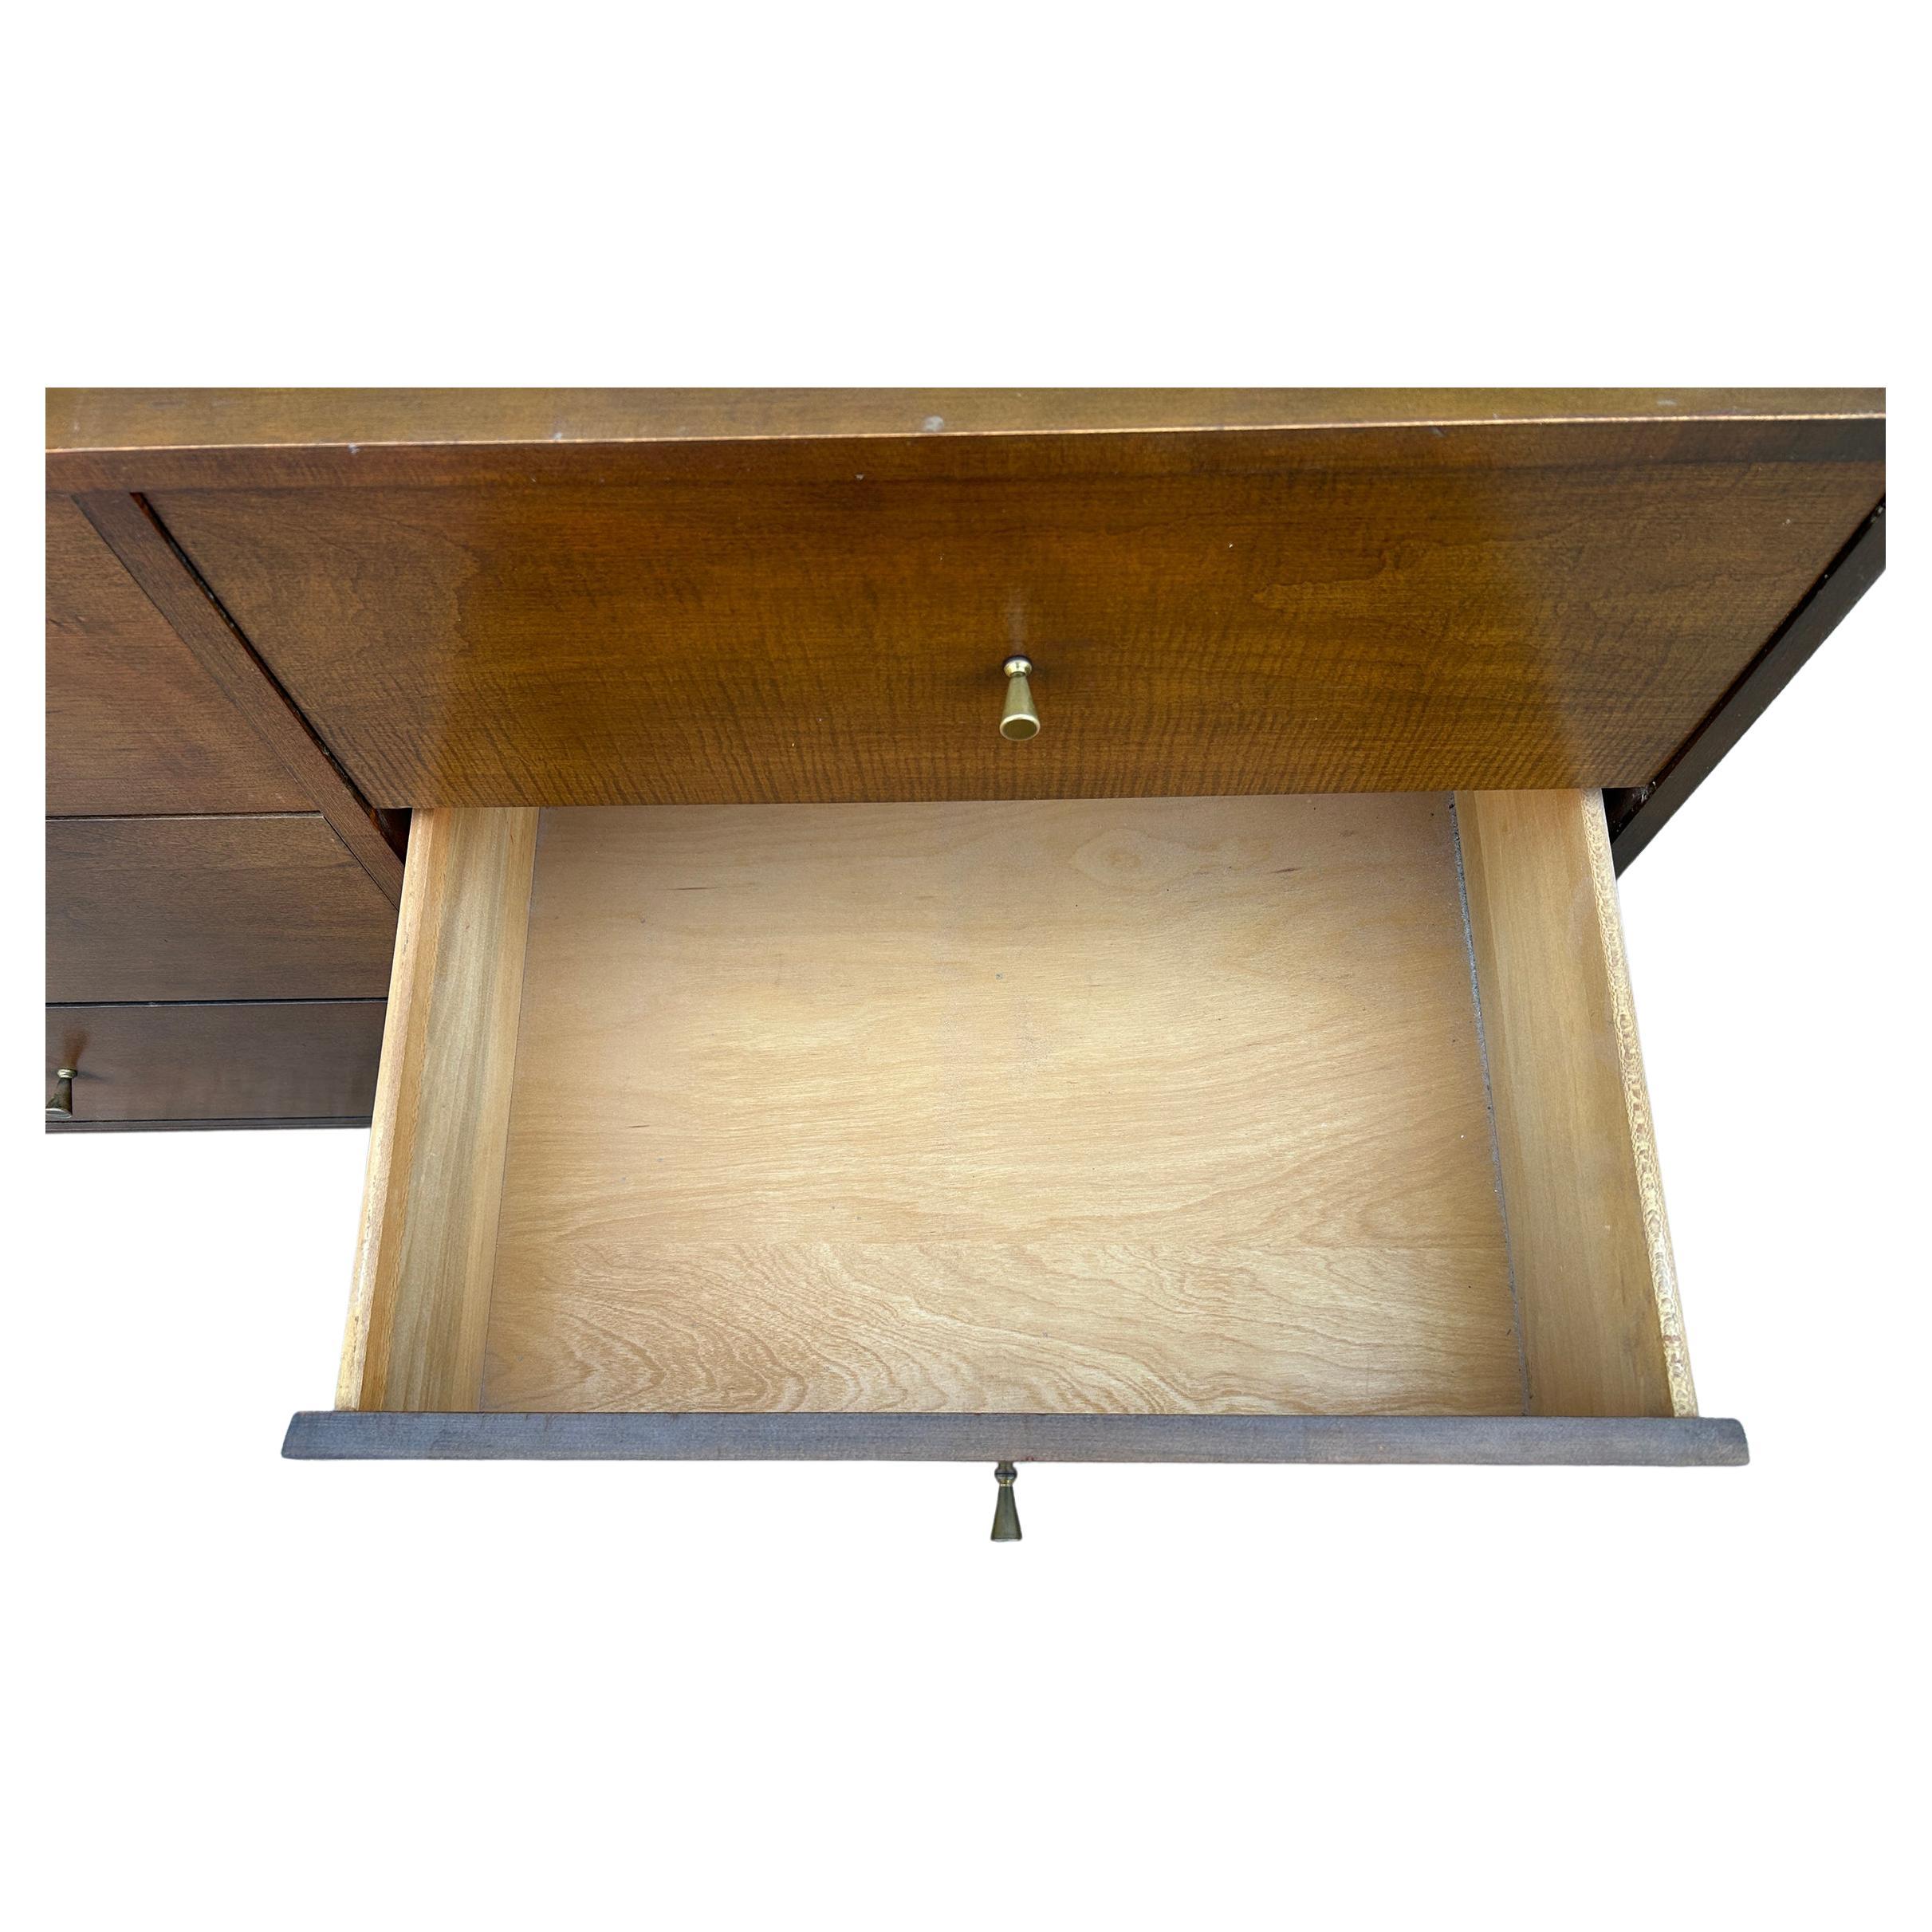 20th Century Midcentury Paul McCobb 6 Drawer Dresser Credenza #1509 Walnut finish Brass pulls For Sale